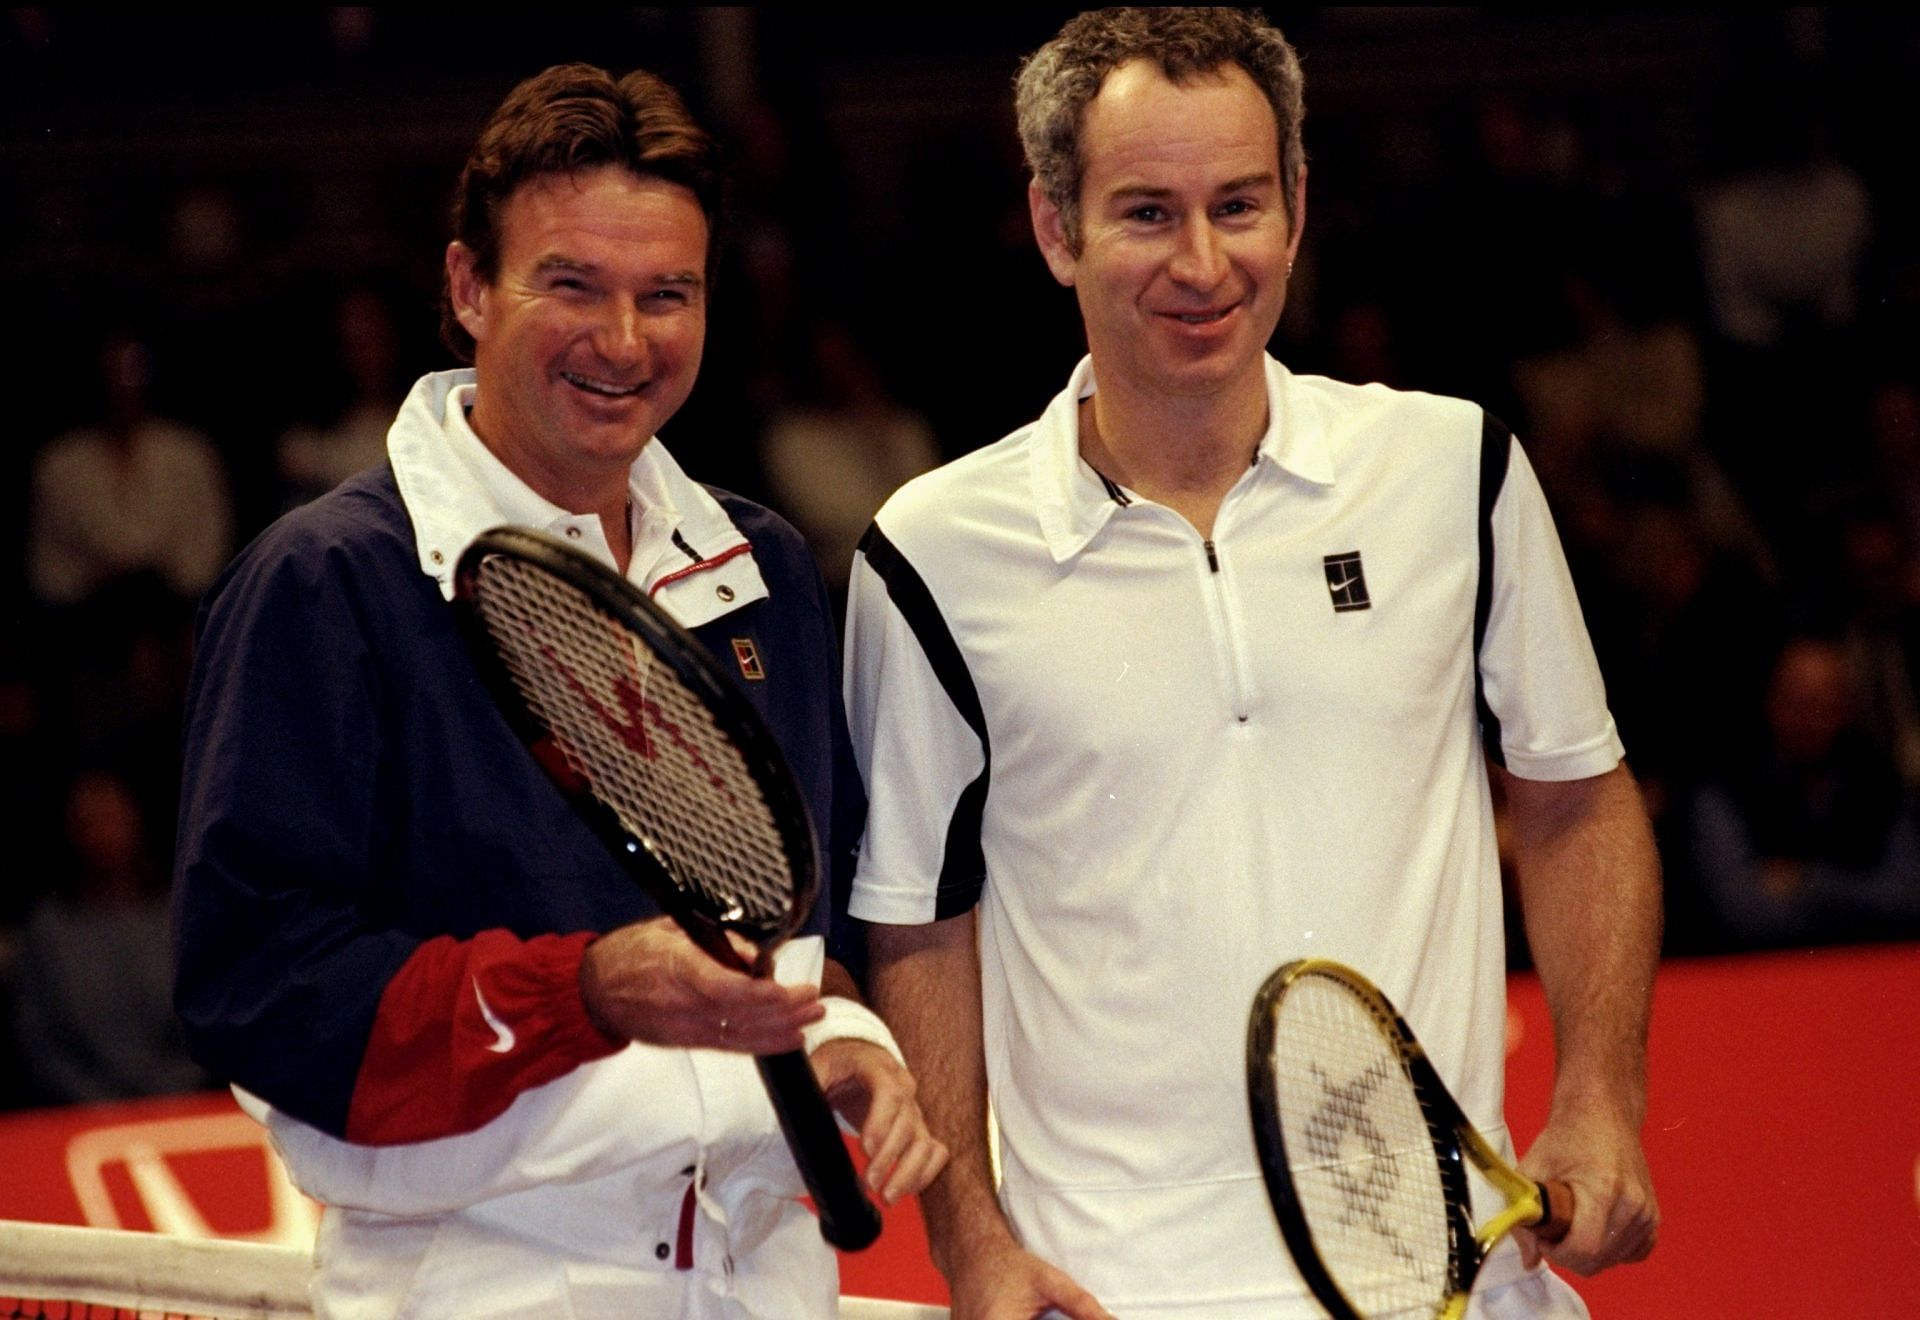 Jimmy Connors (left) and John McEnroe